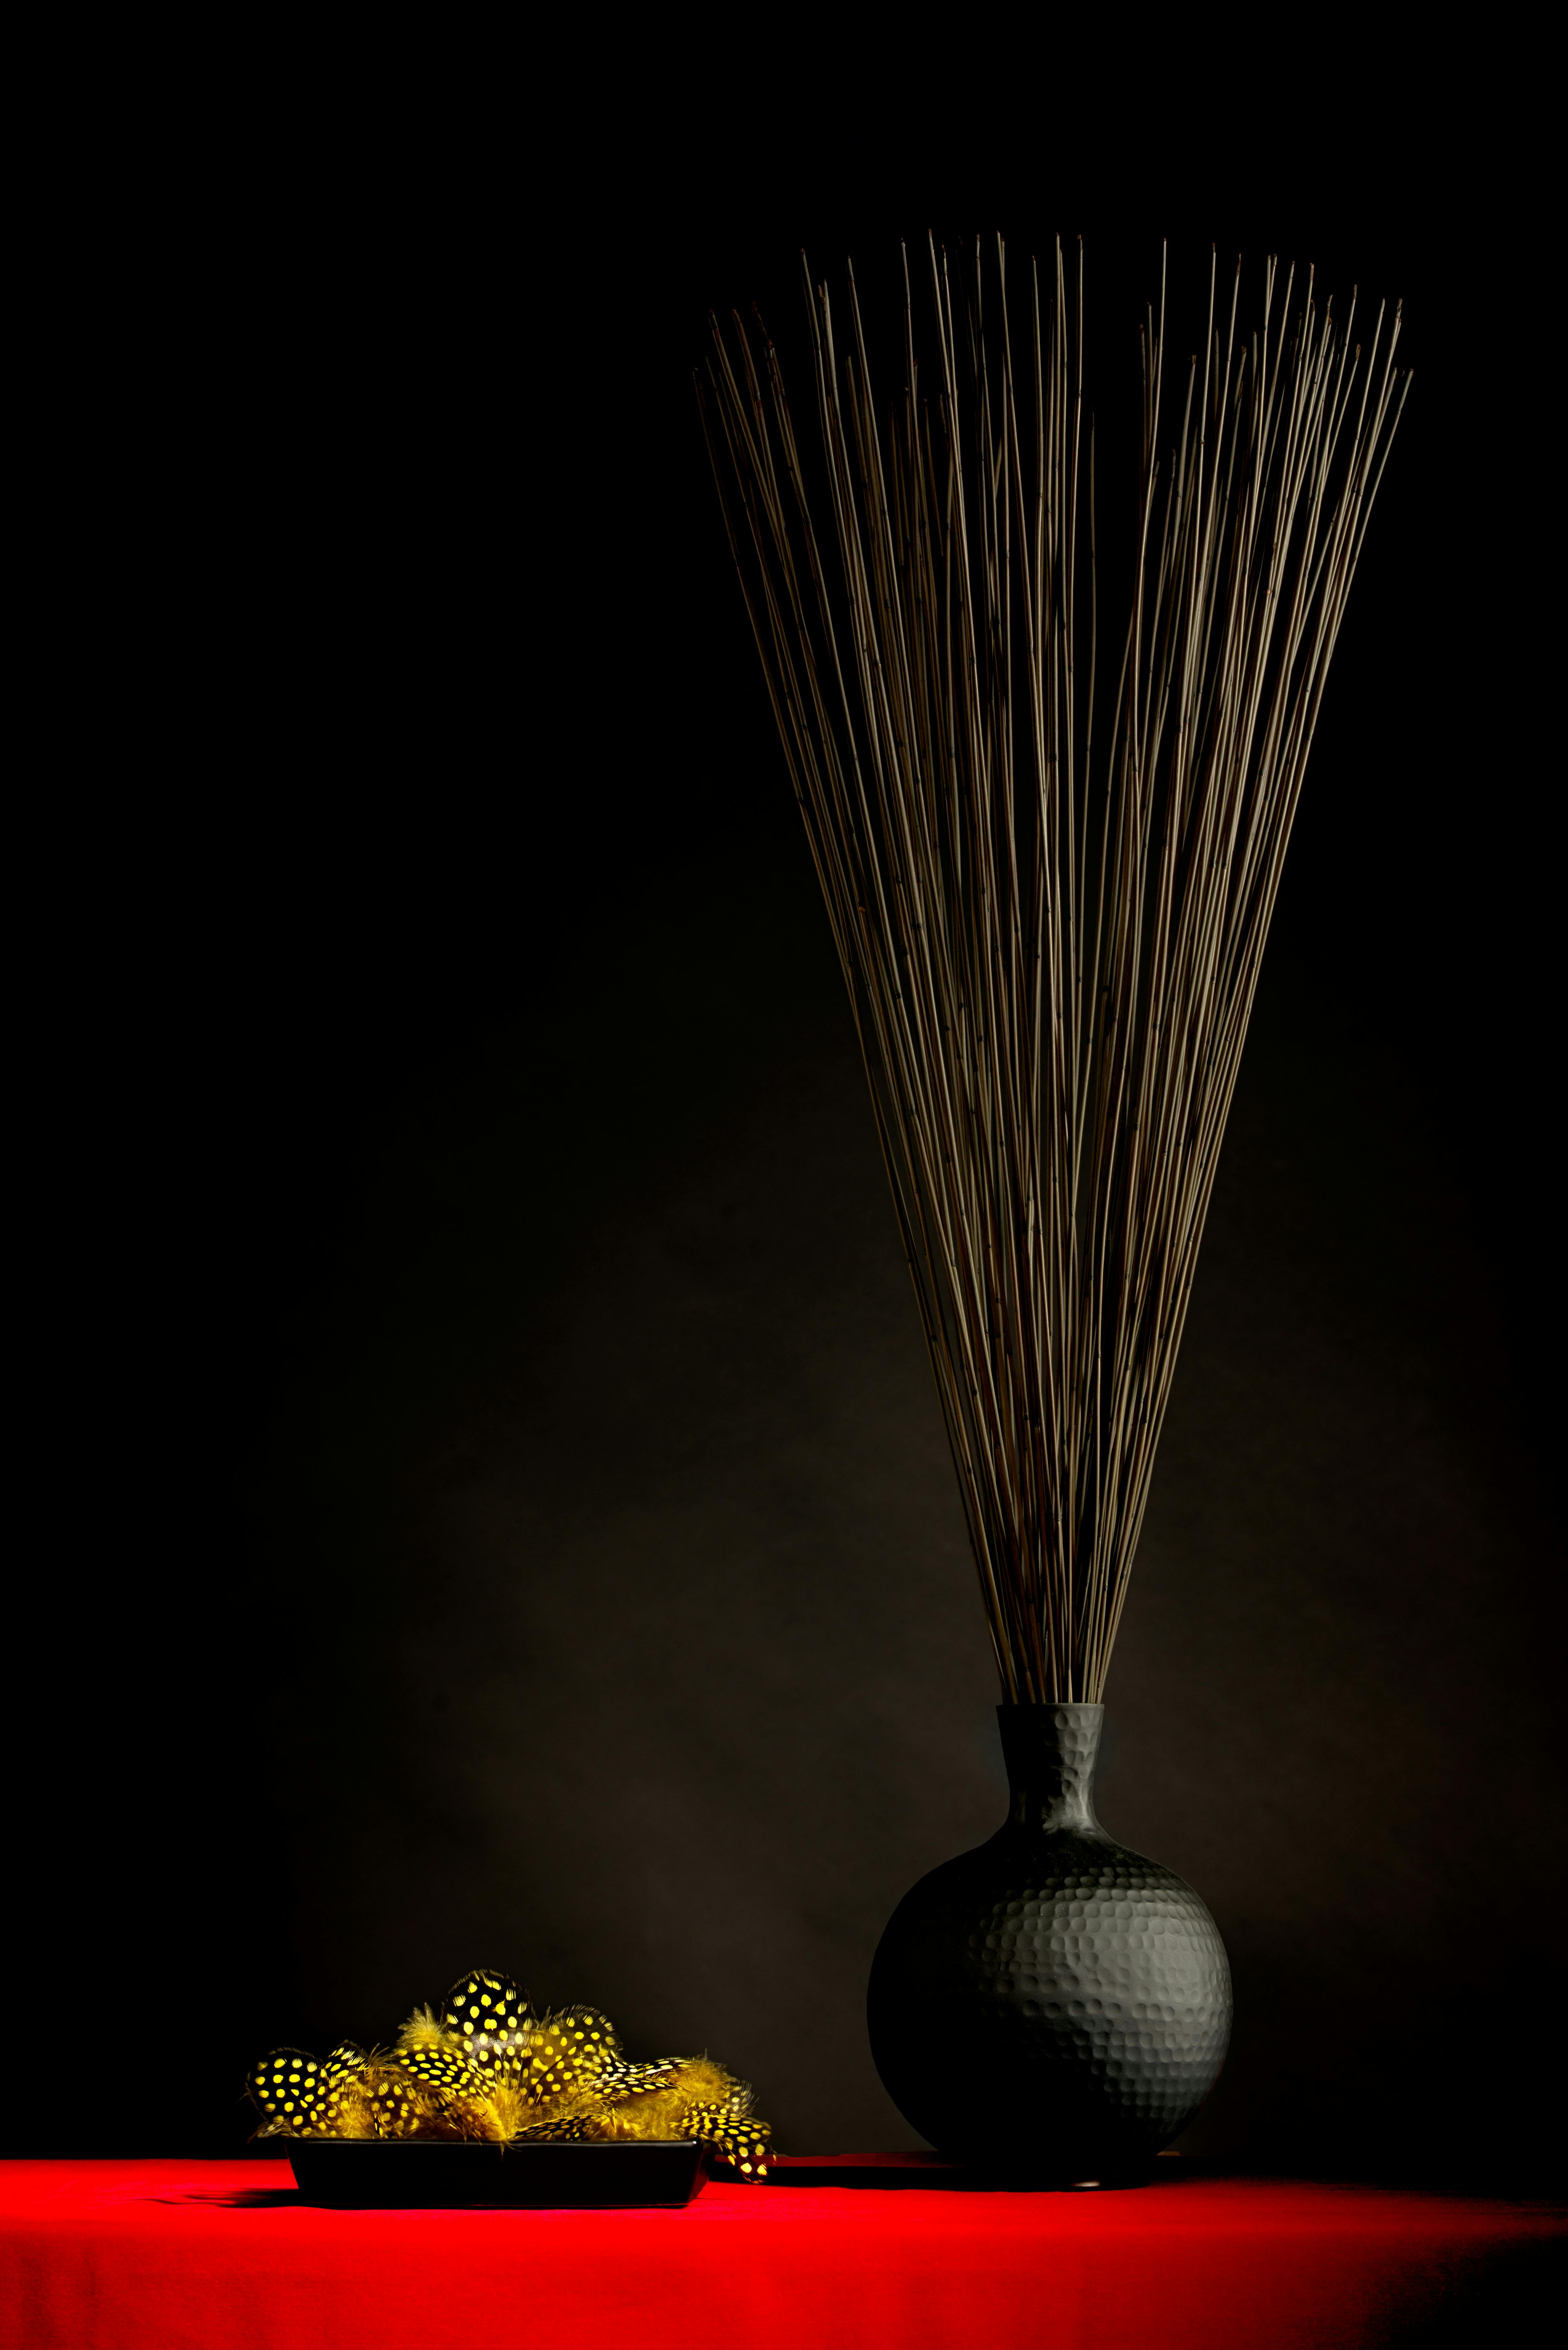 Decorative Black Ceramic Vase With Sticks On A Table